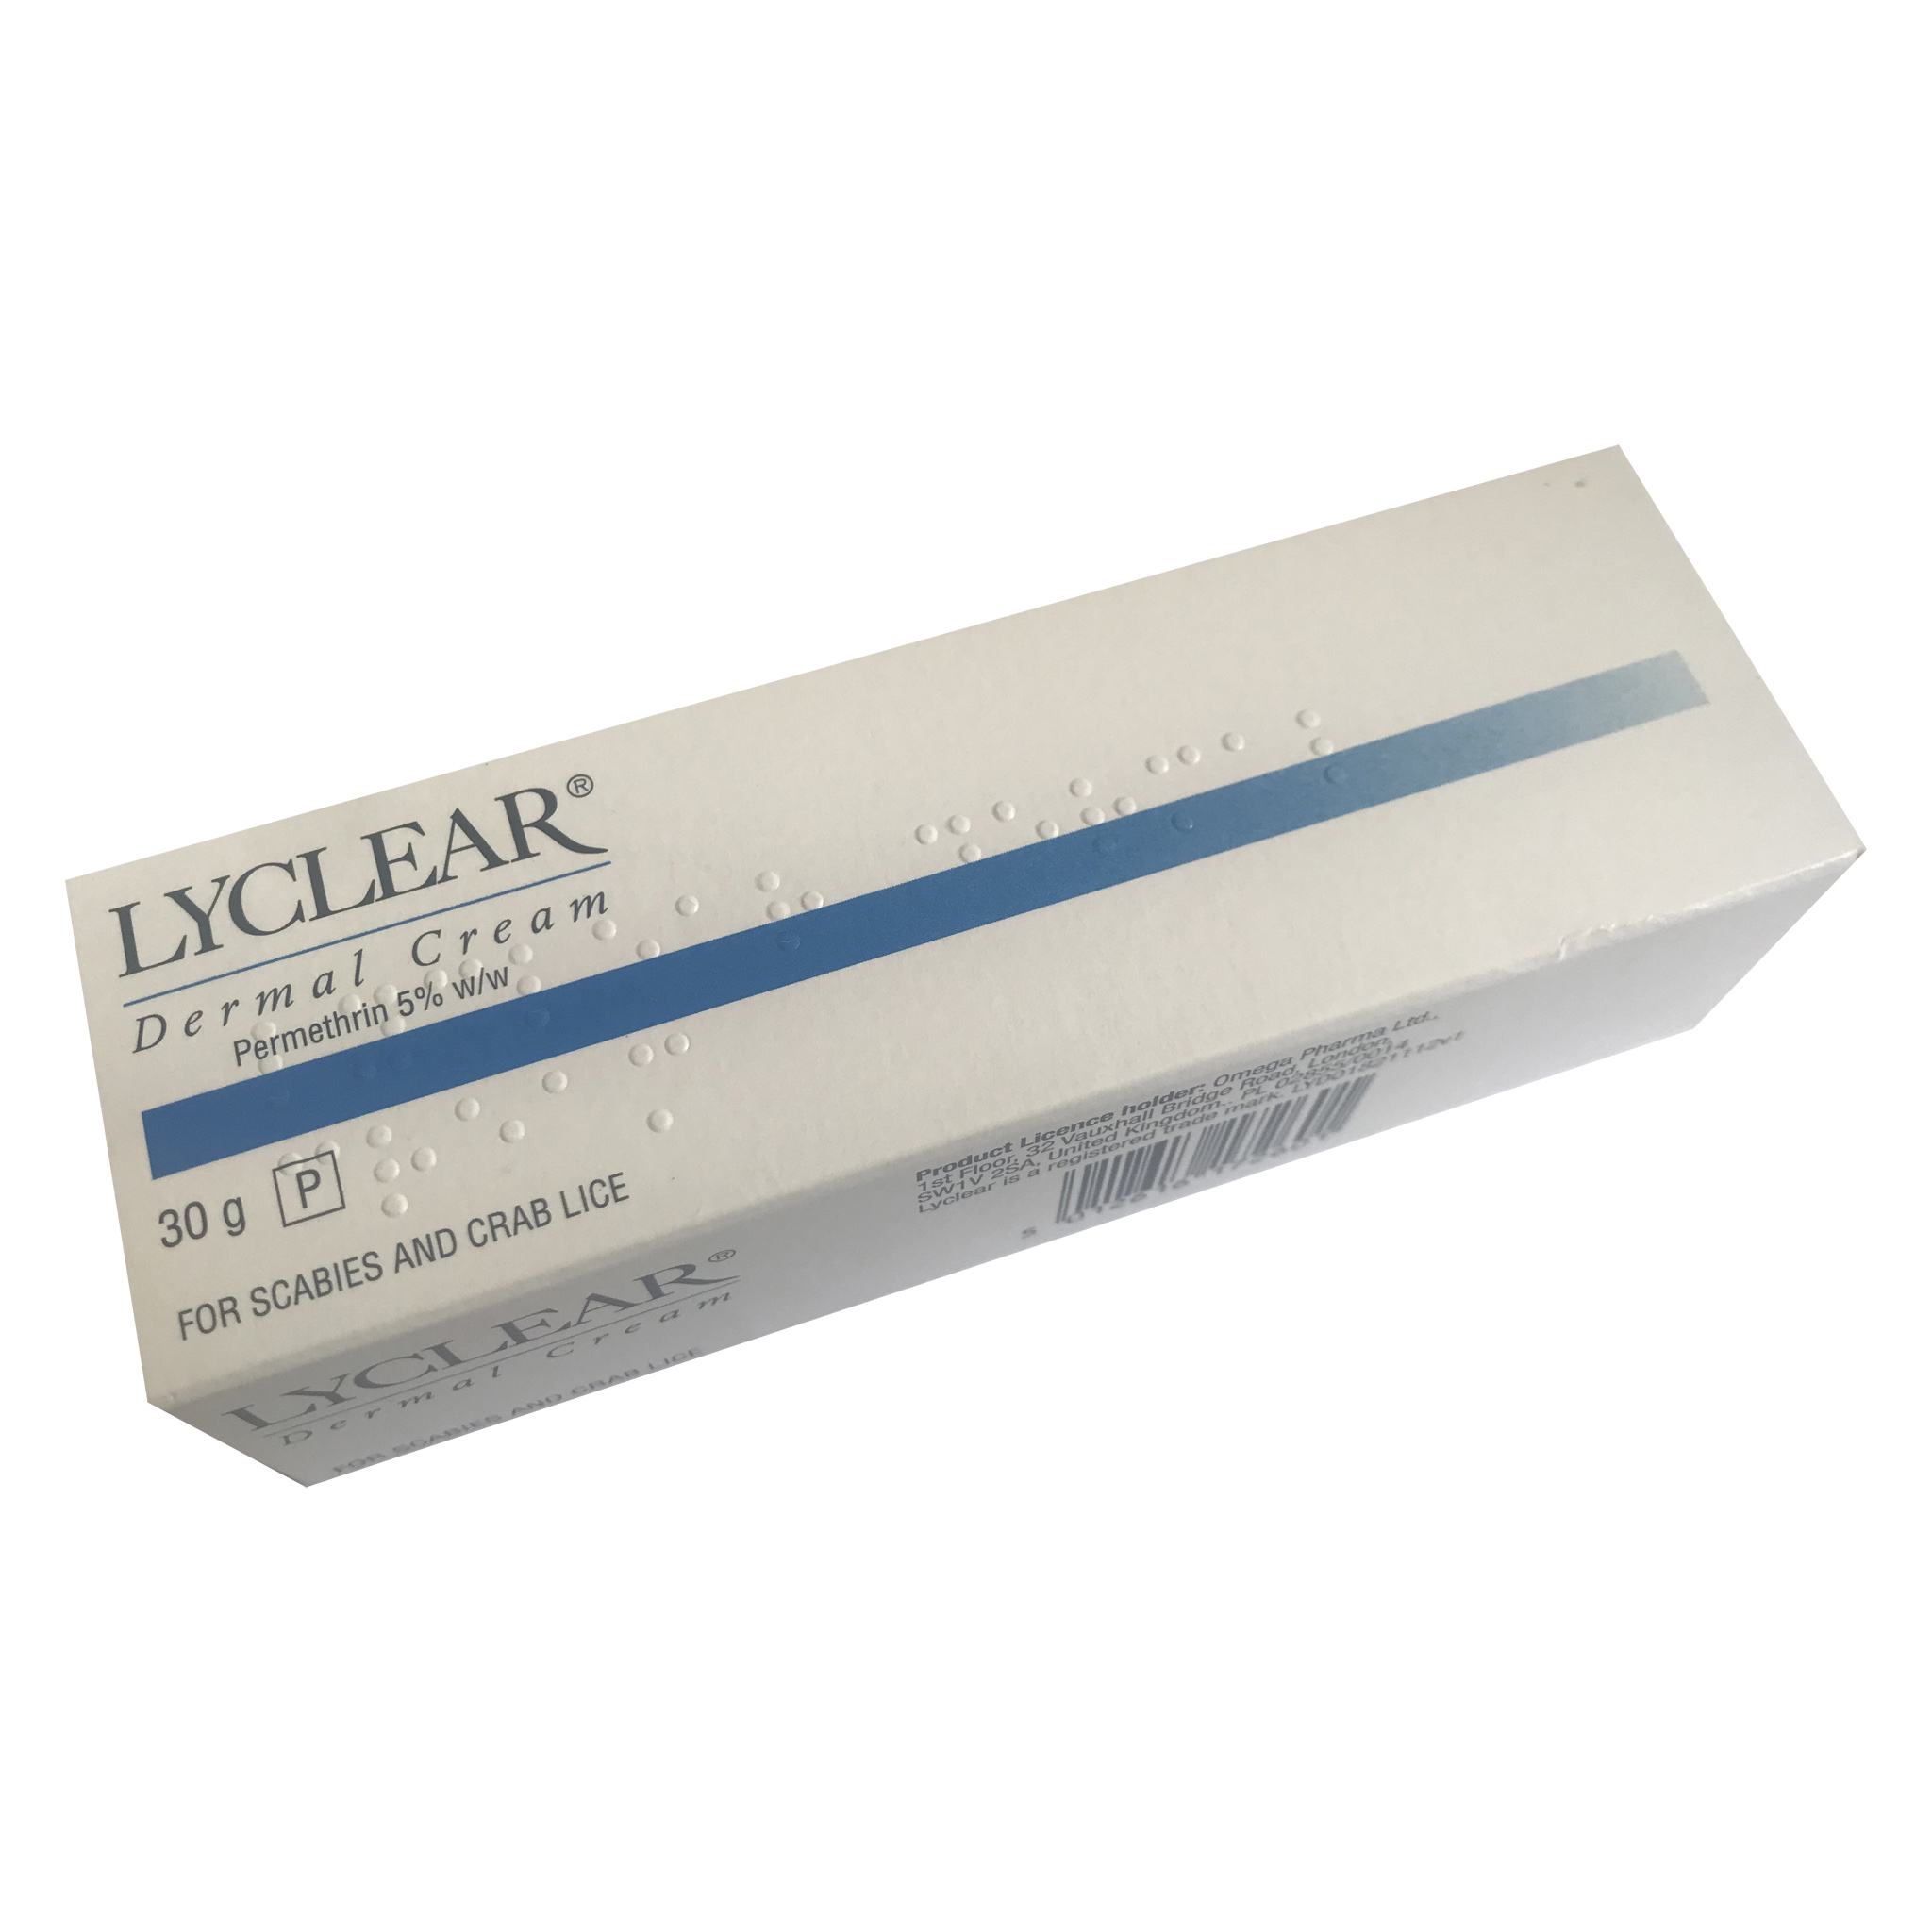 Lyclear Dermal Cream (30g) - 7 Packs